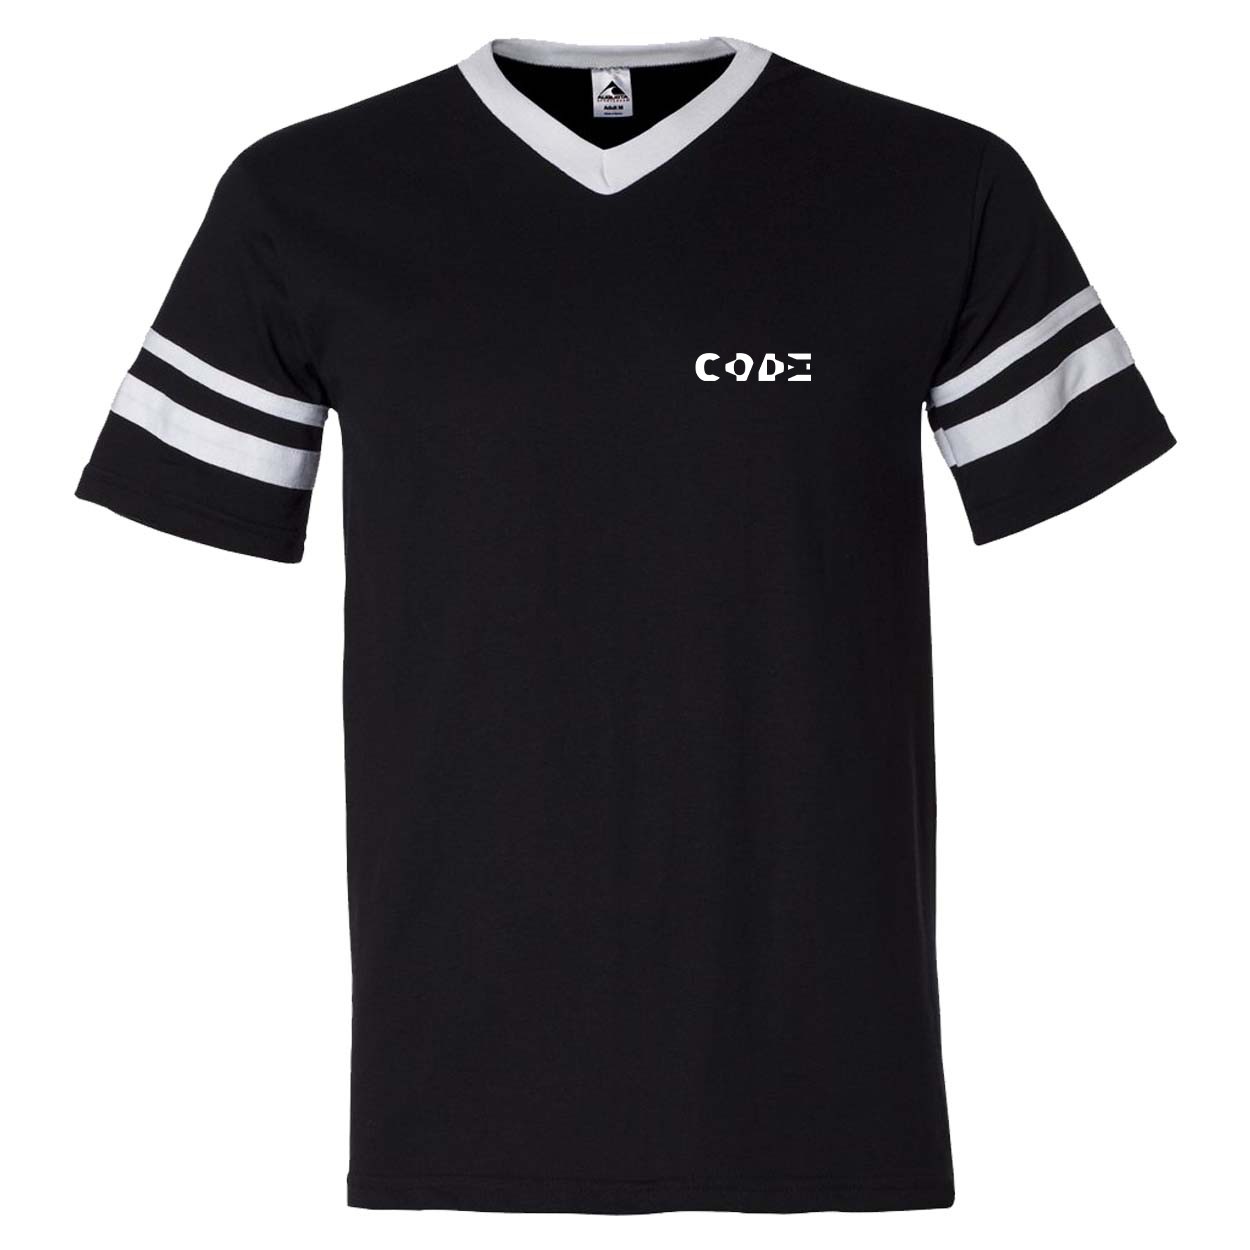 Code Tag Logo Night Out Premium Striped Jersey T-Shirt Black/White